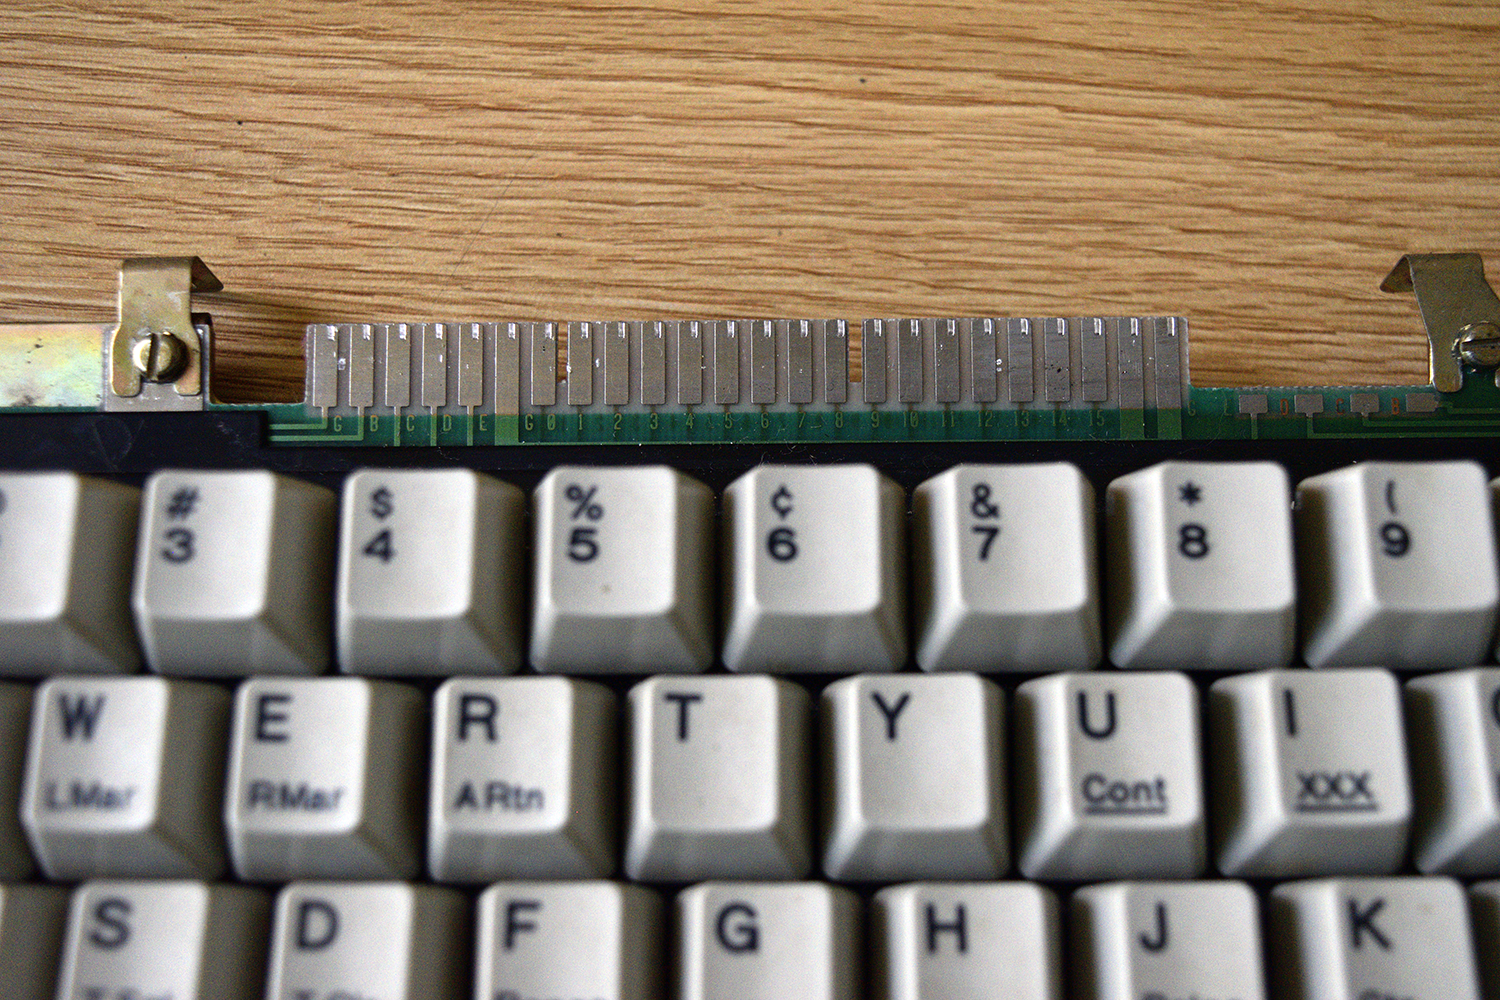 IBM 95 -- PCB Pinout, 24 pins, 16x4 matrix